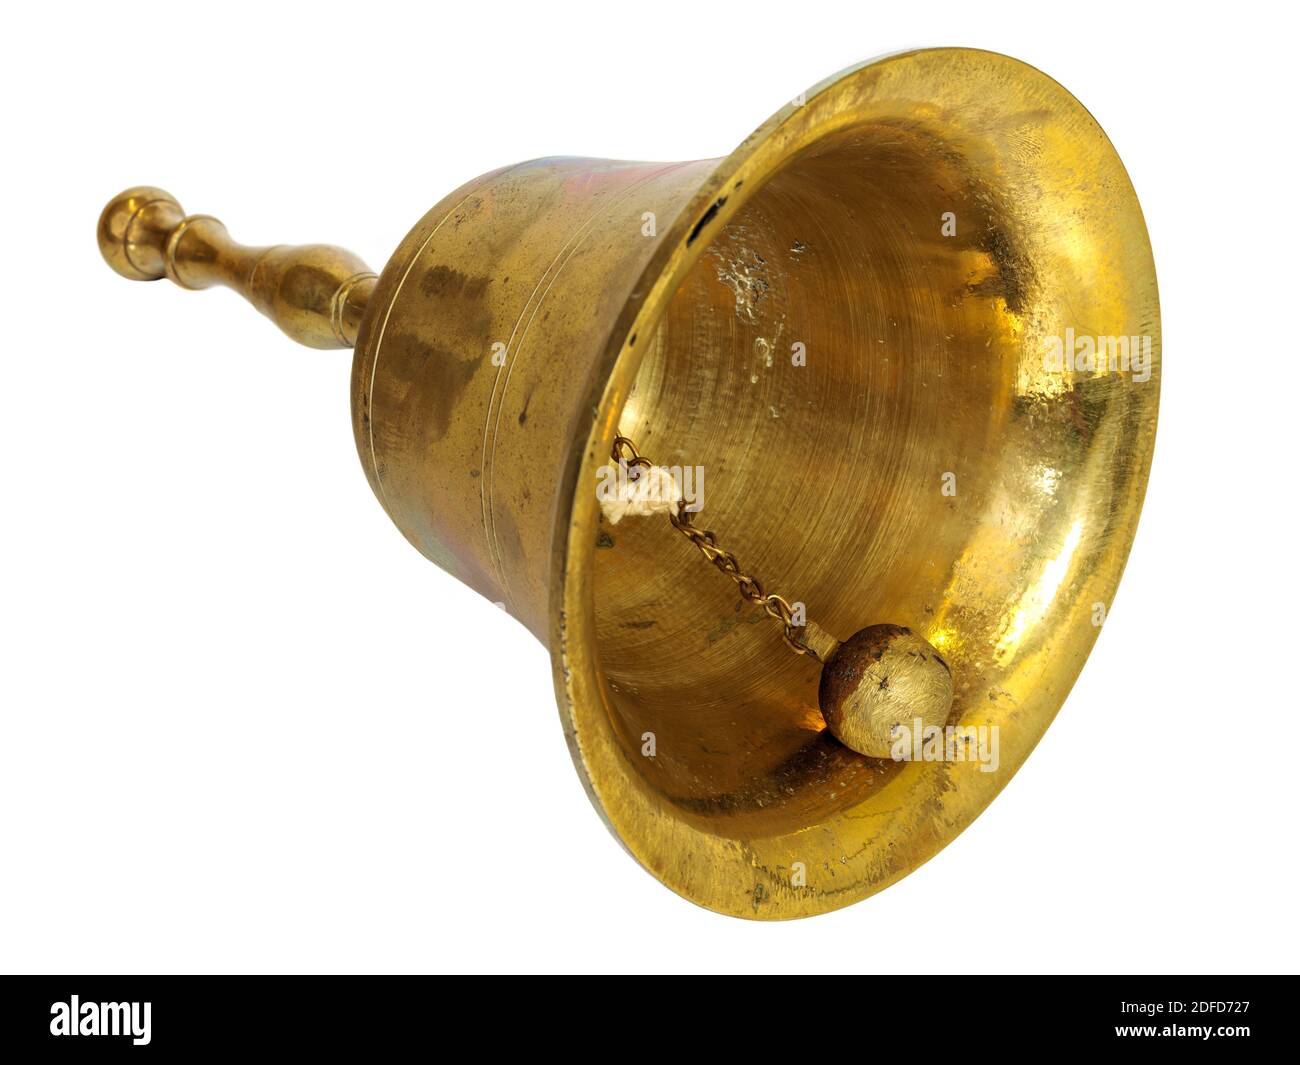 Large bell School bell Hand bell Vintage solid brass Wooden handle Dark brown wood handle